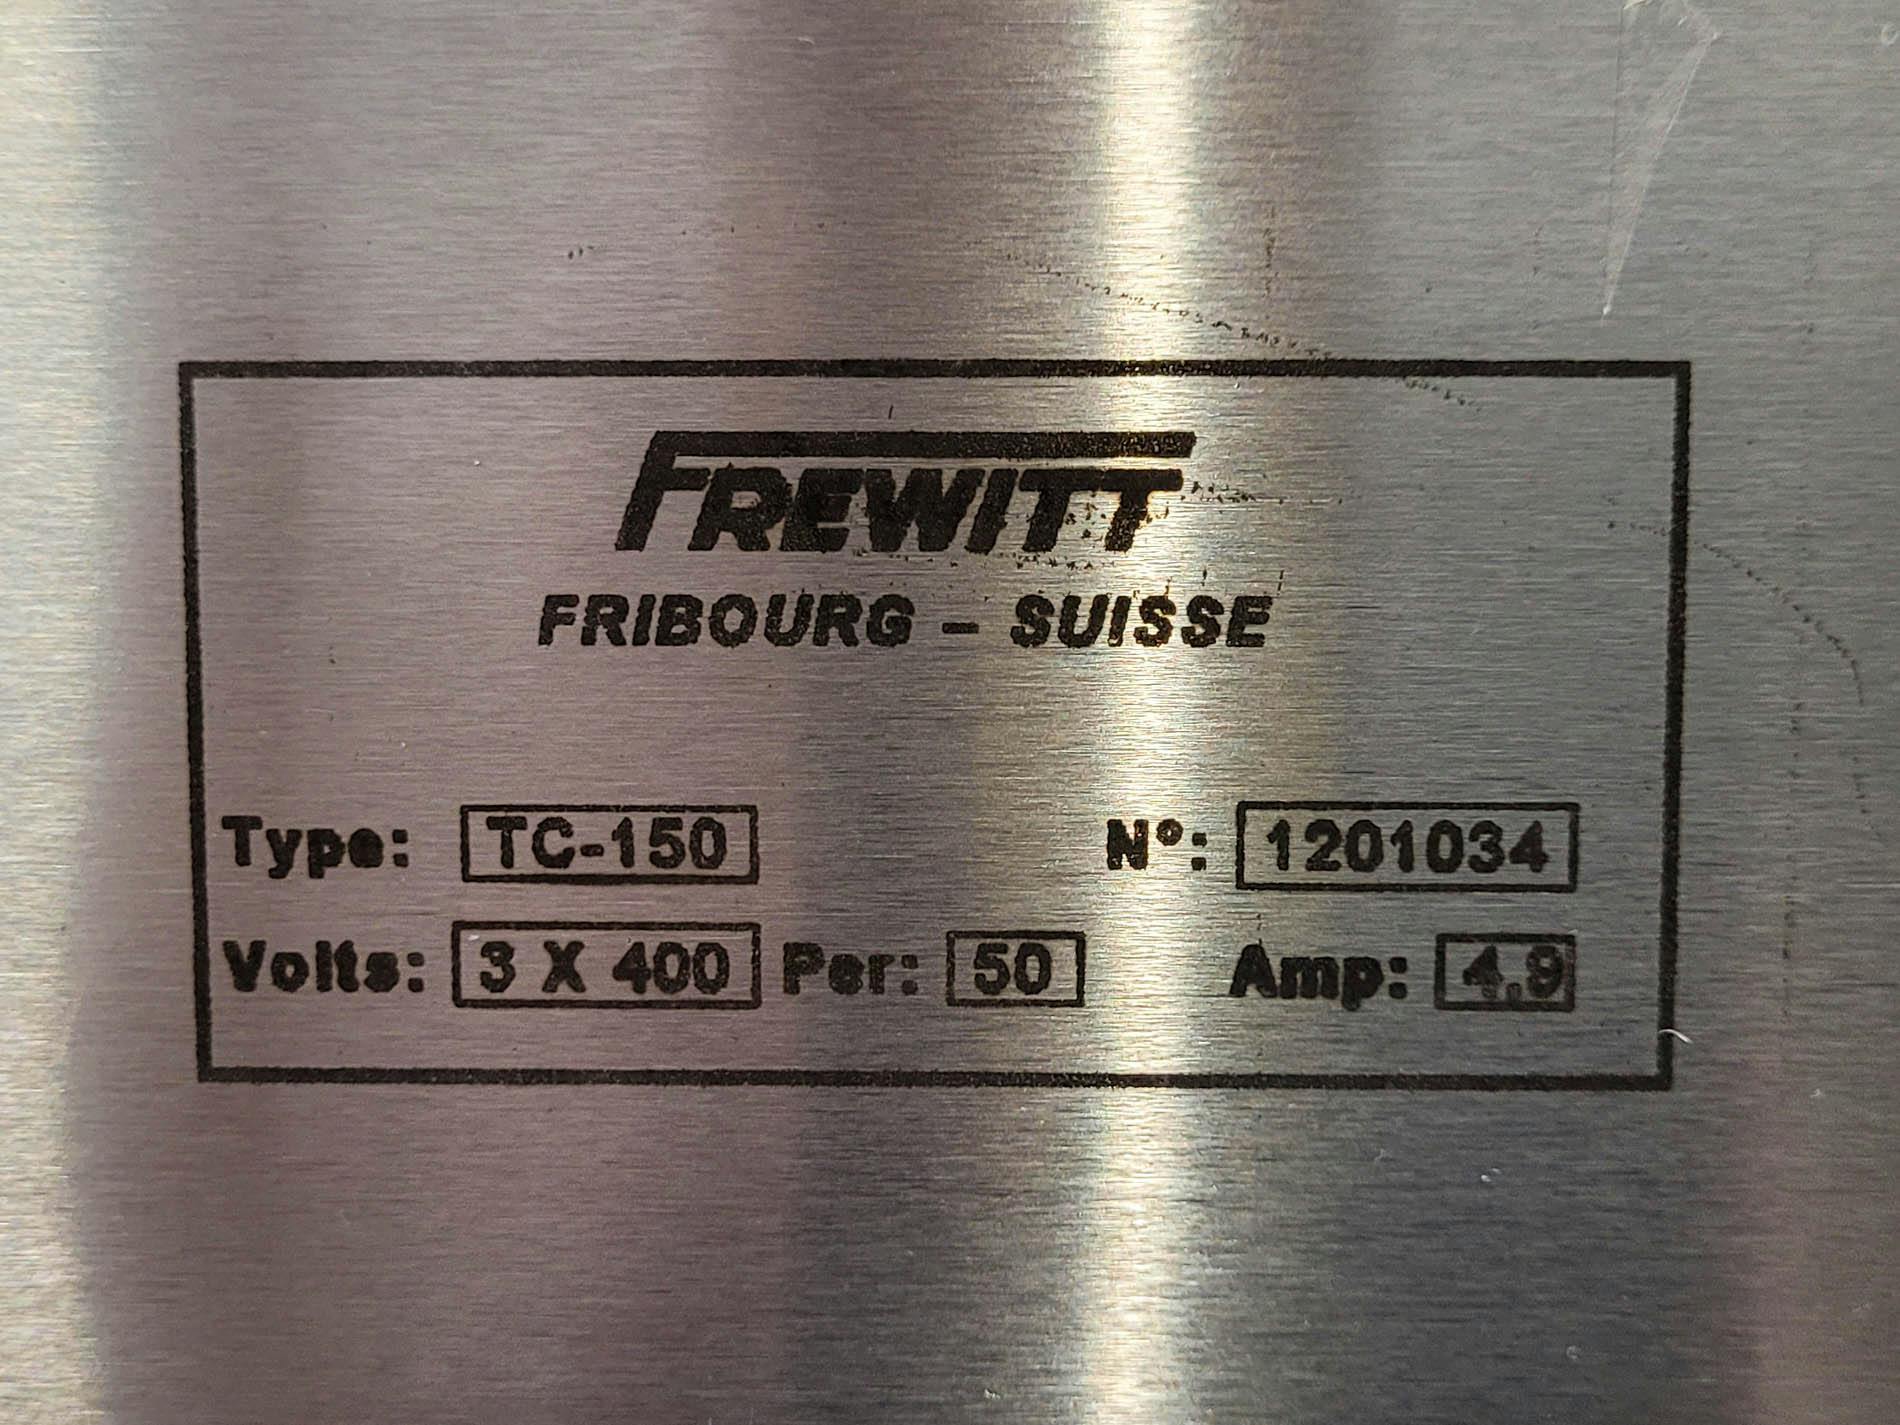 Frewitt Fribourg TC-150 - Sítový granulátor - image 15